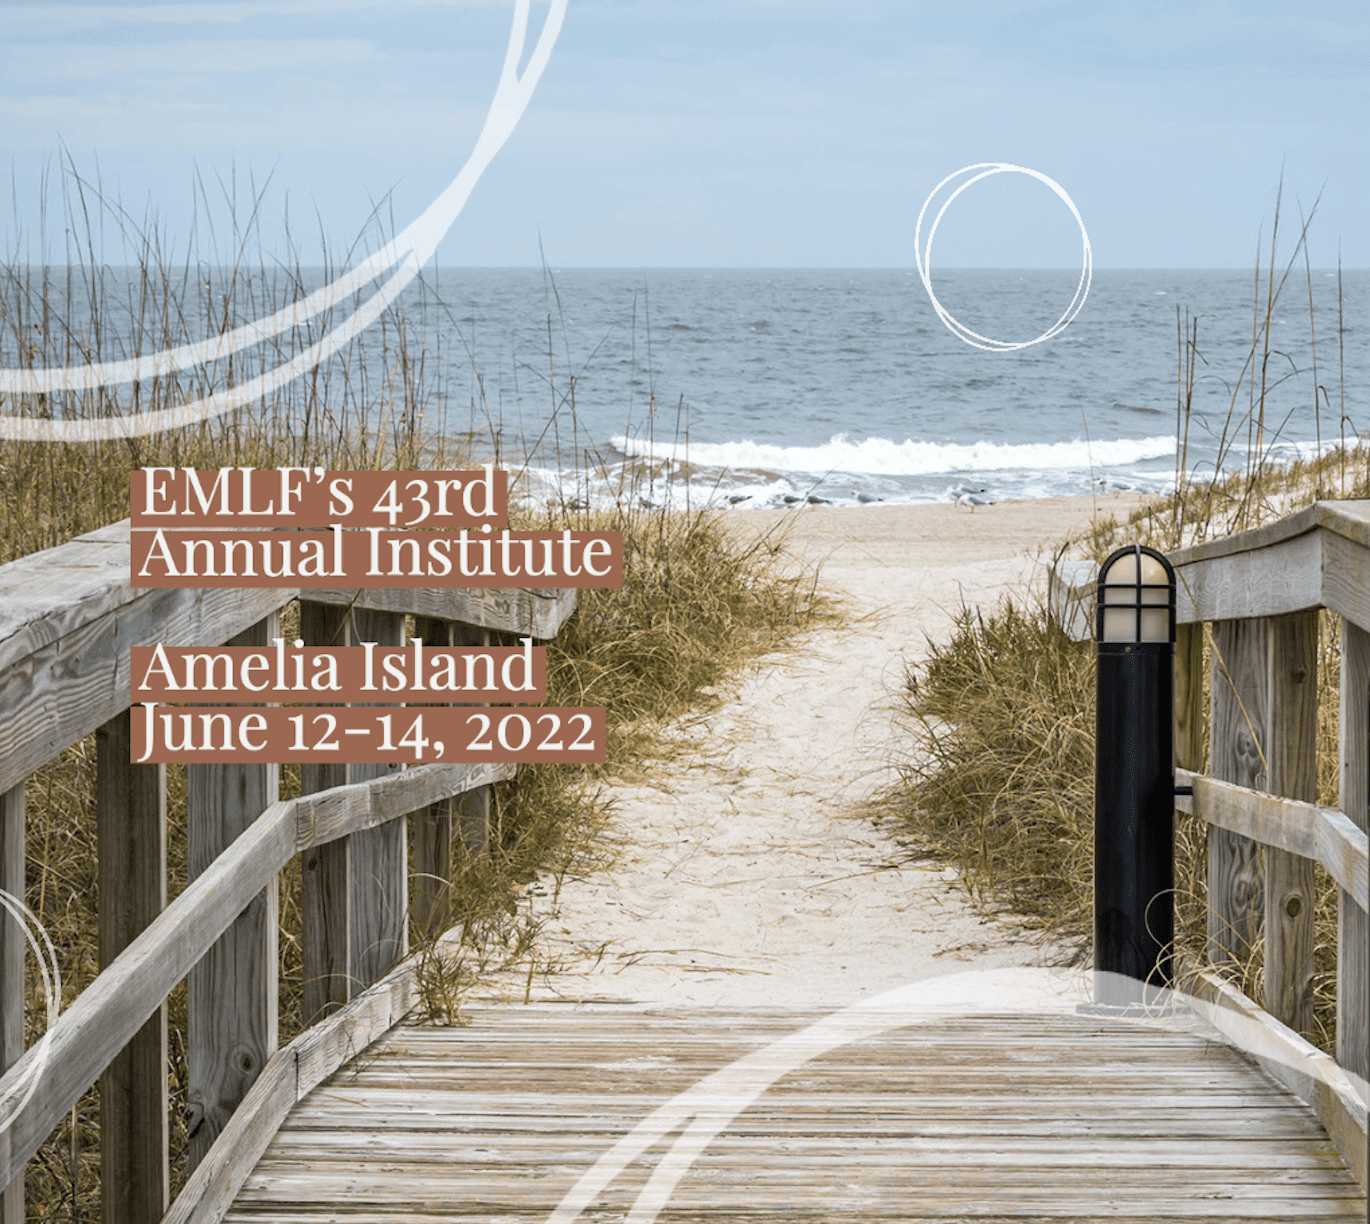 Annual Institute set for Amelia Island in June 2022